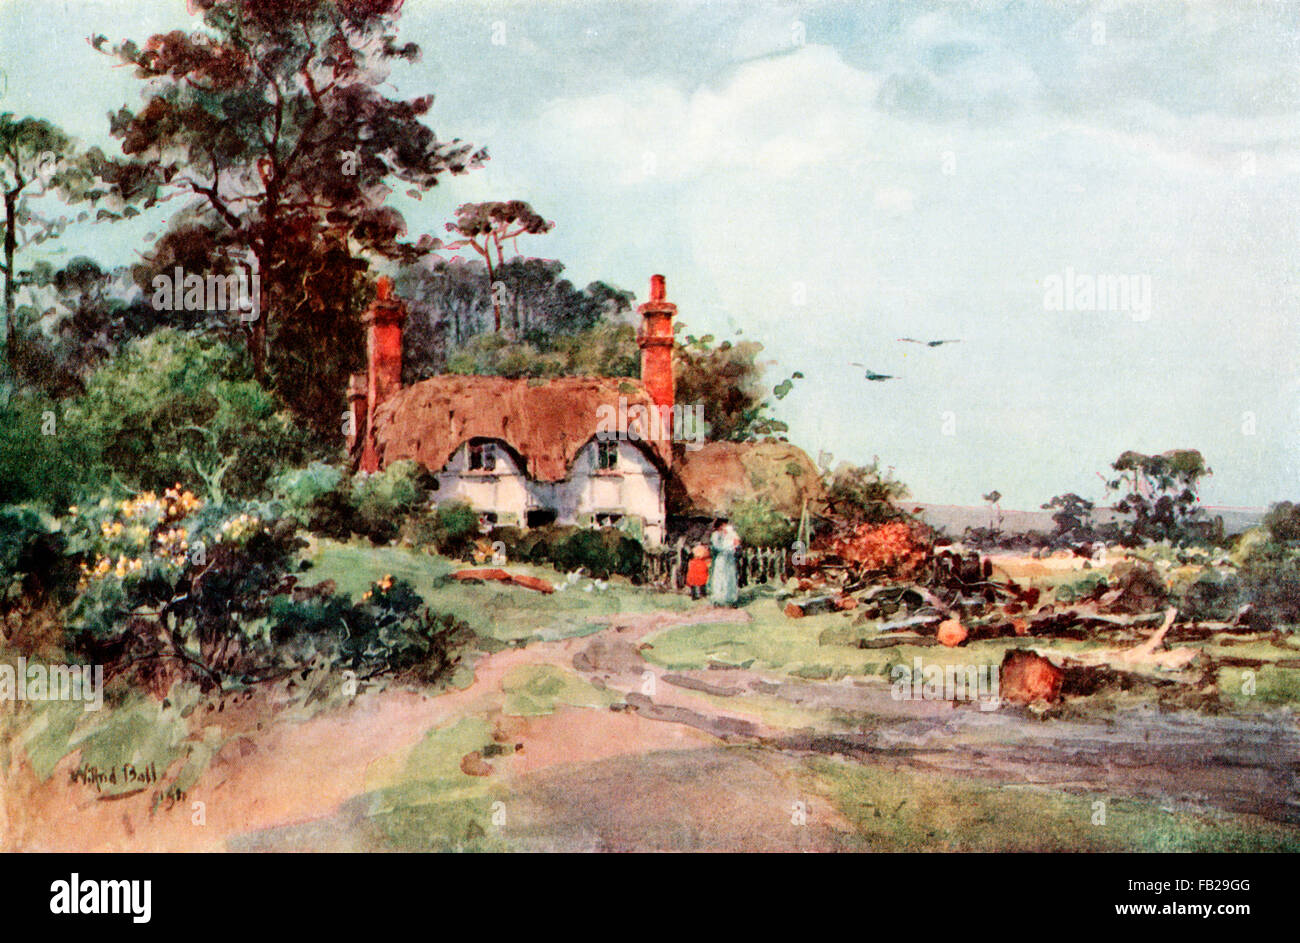 Idyllic Edwardian Country Scene, Wallhampton, Hampshire, 1911 painting by artist Wilfrid Ball Stock Photo